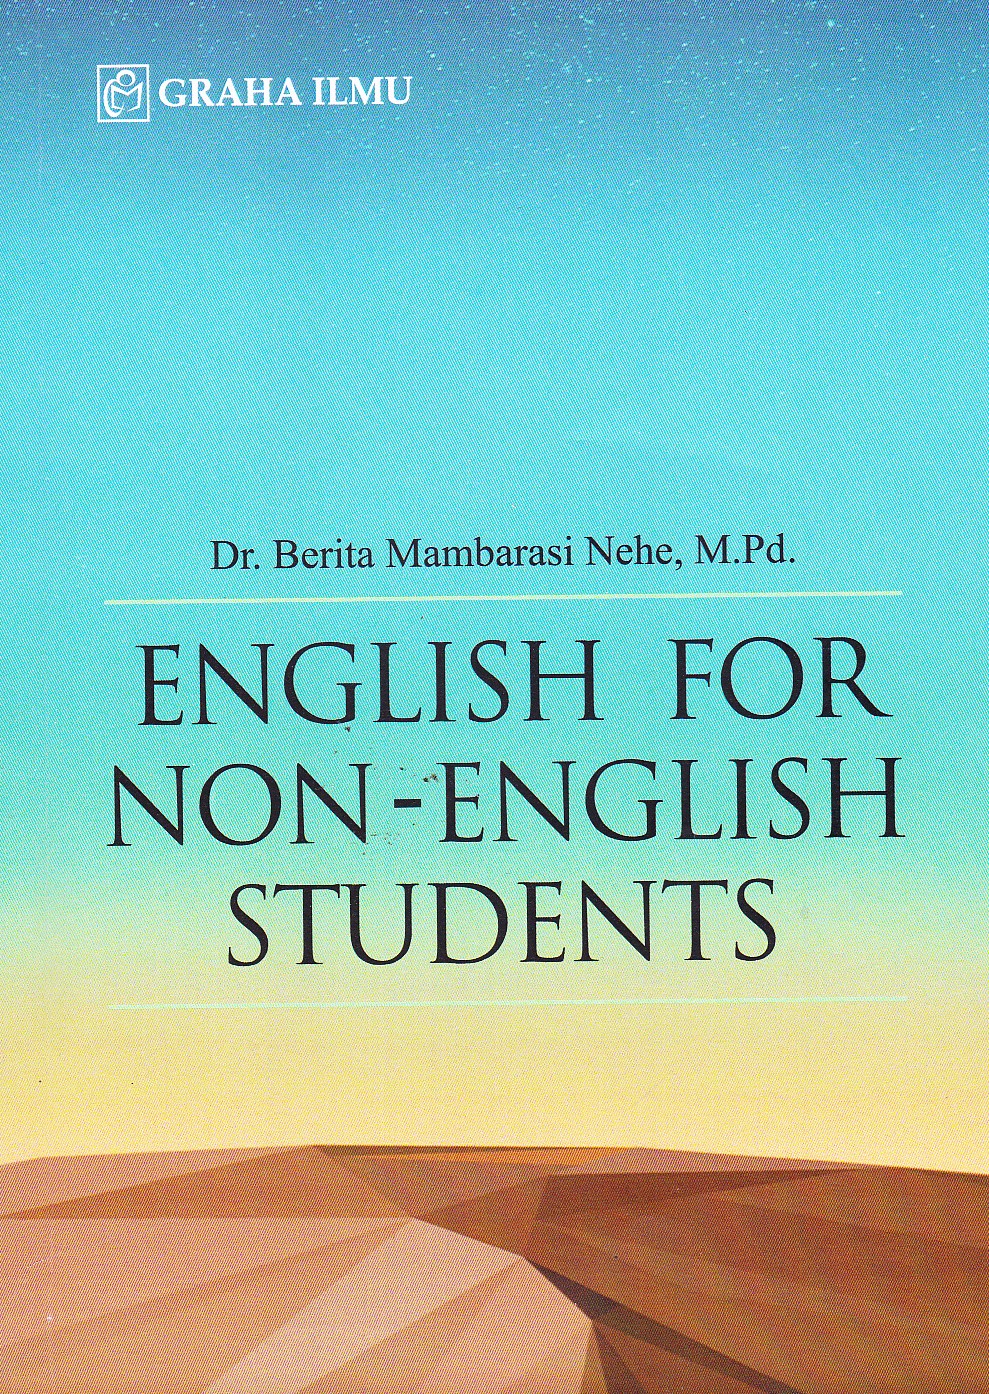 English for non-english students